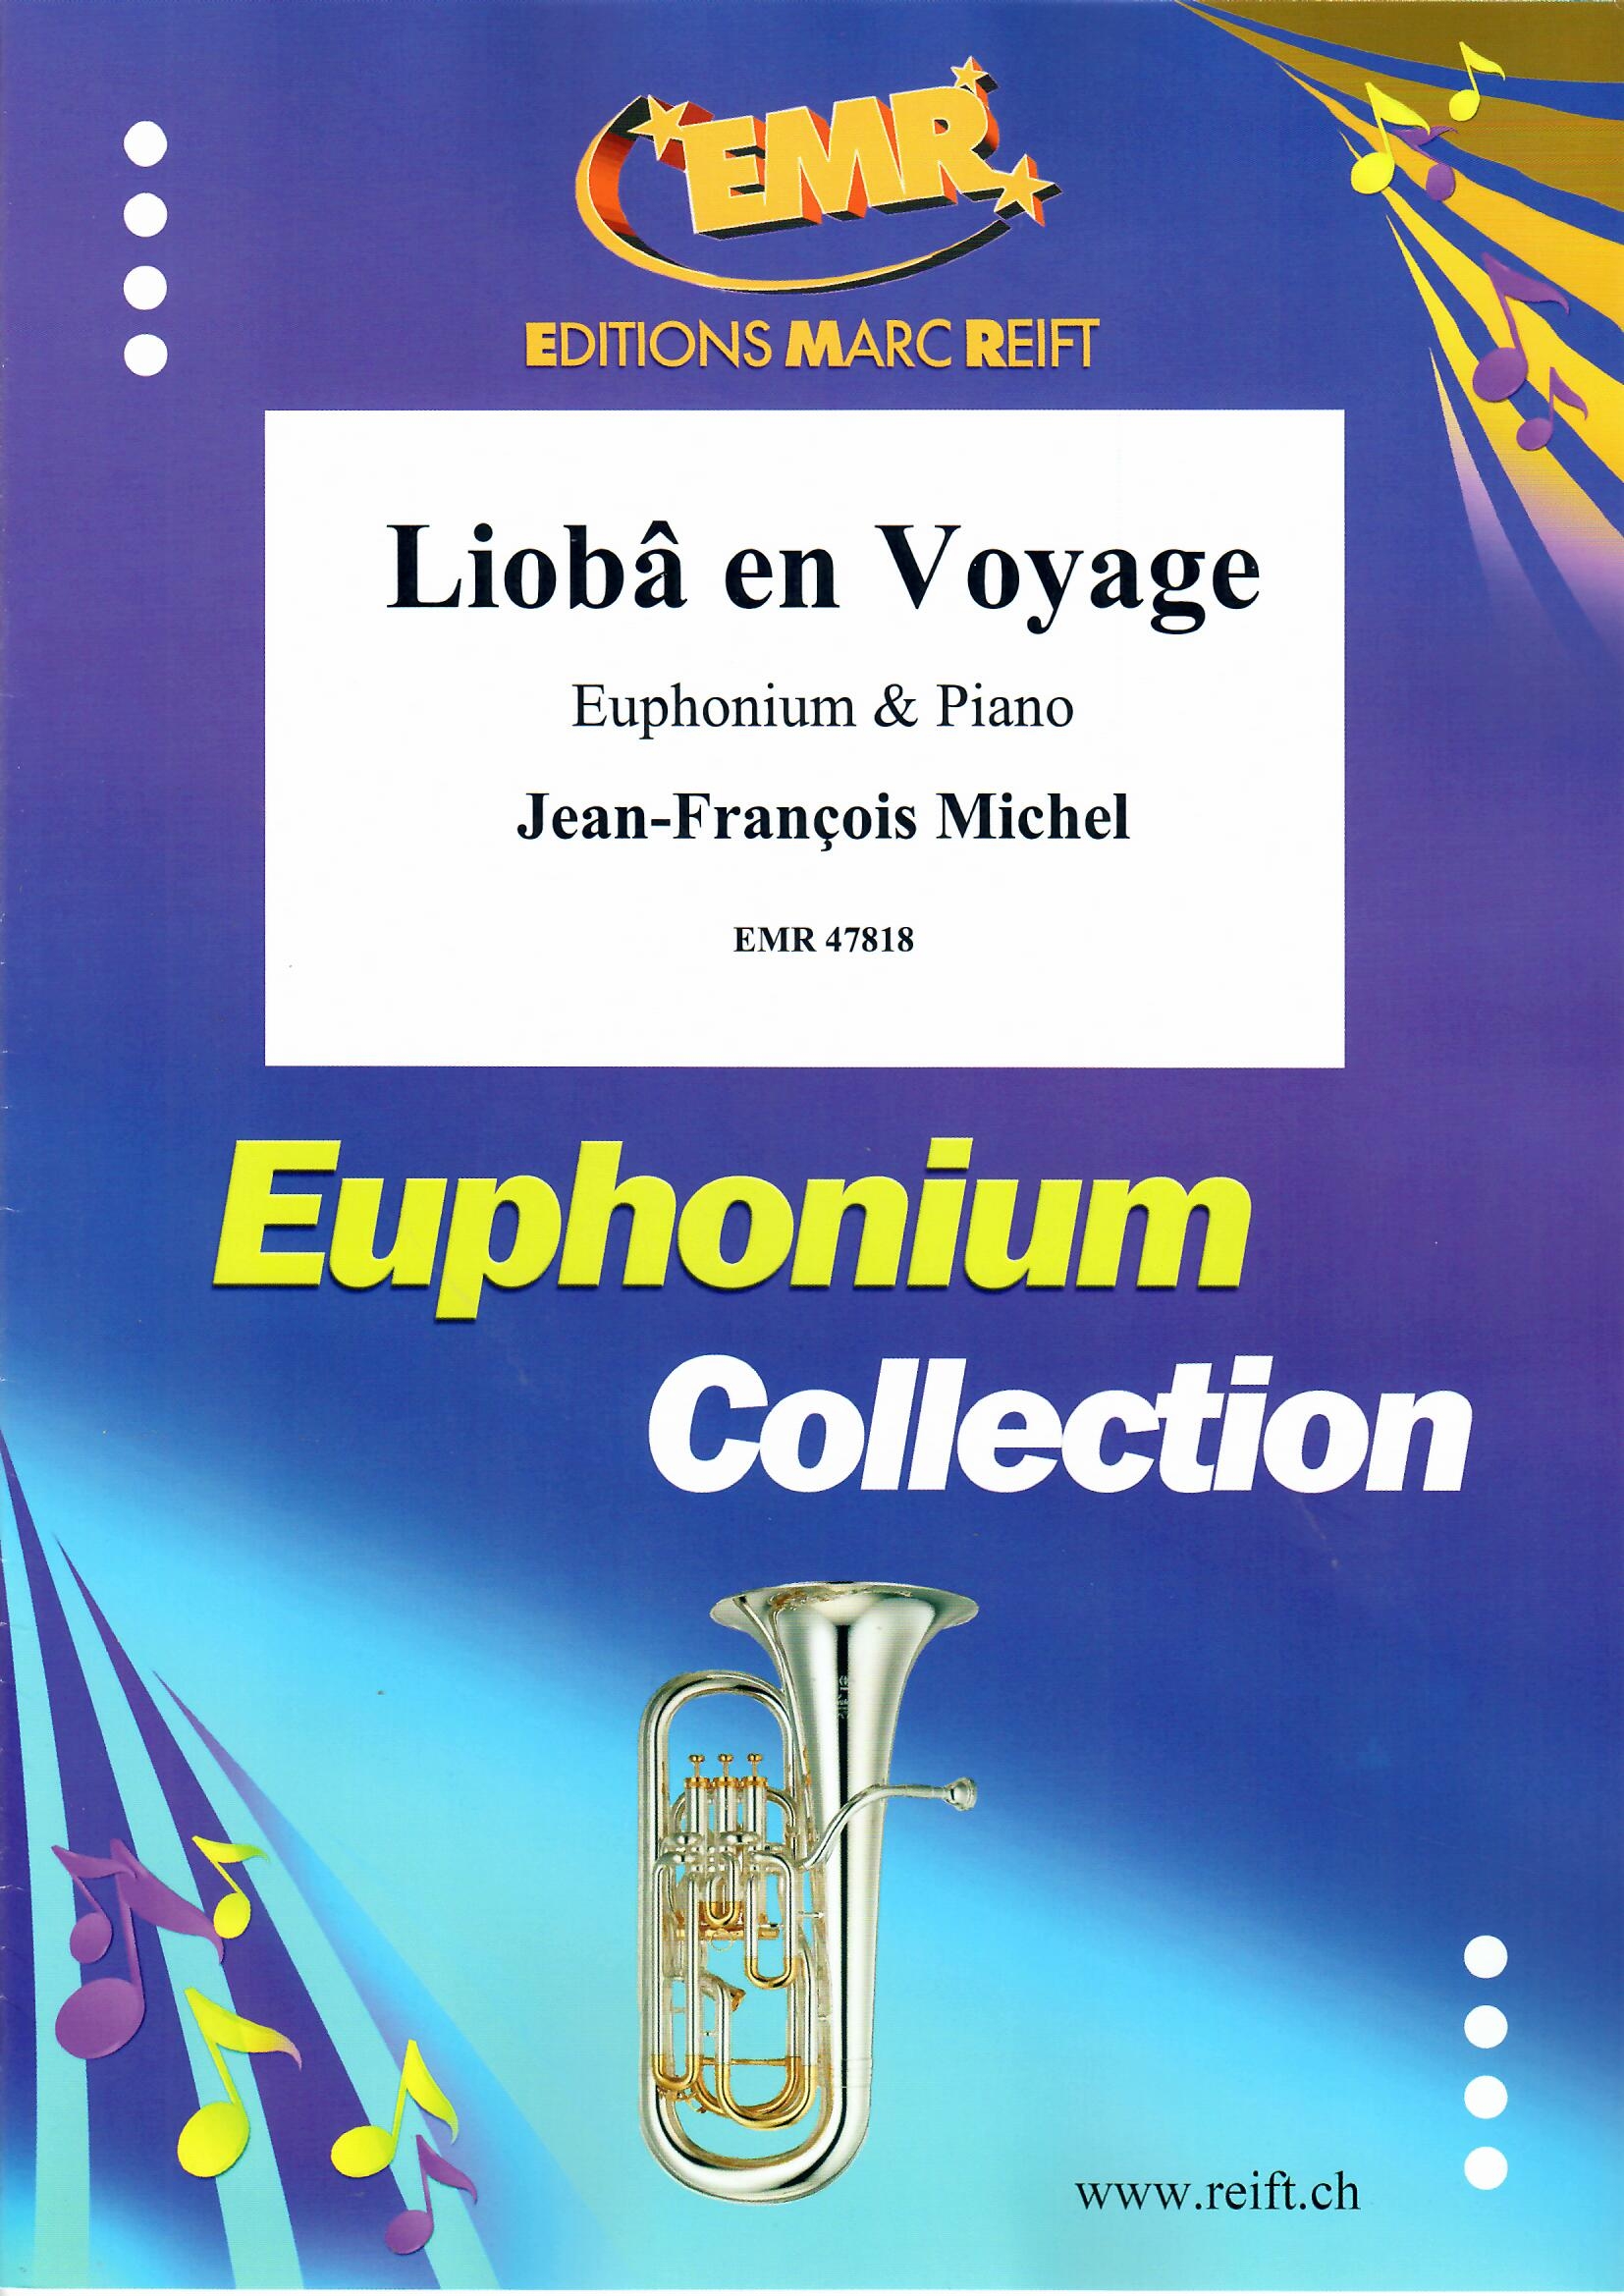 LIOBâ EN VOYAGE - Euphonium & Piano, SOLOS - Euphonium